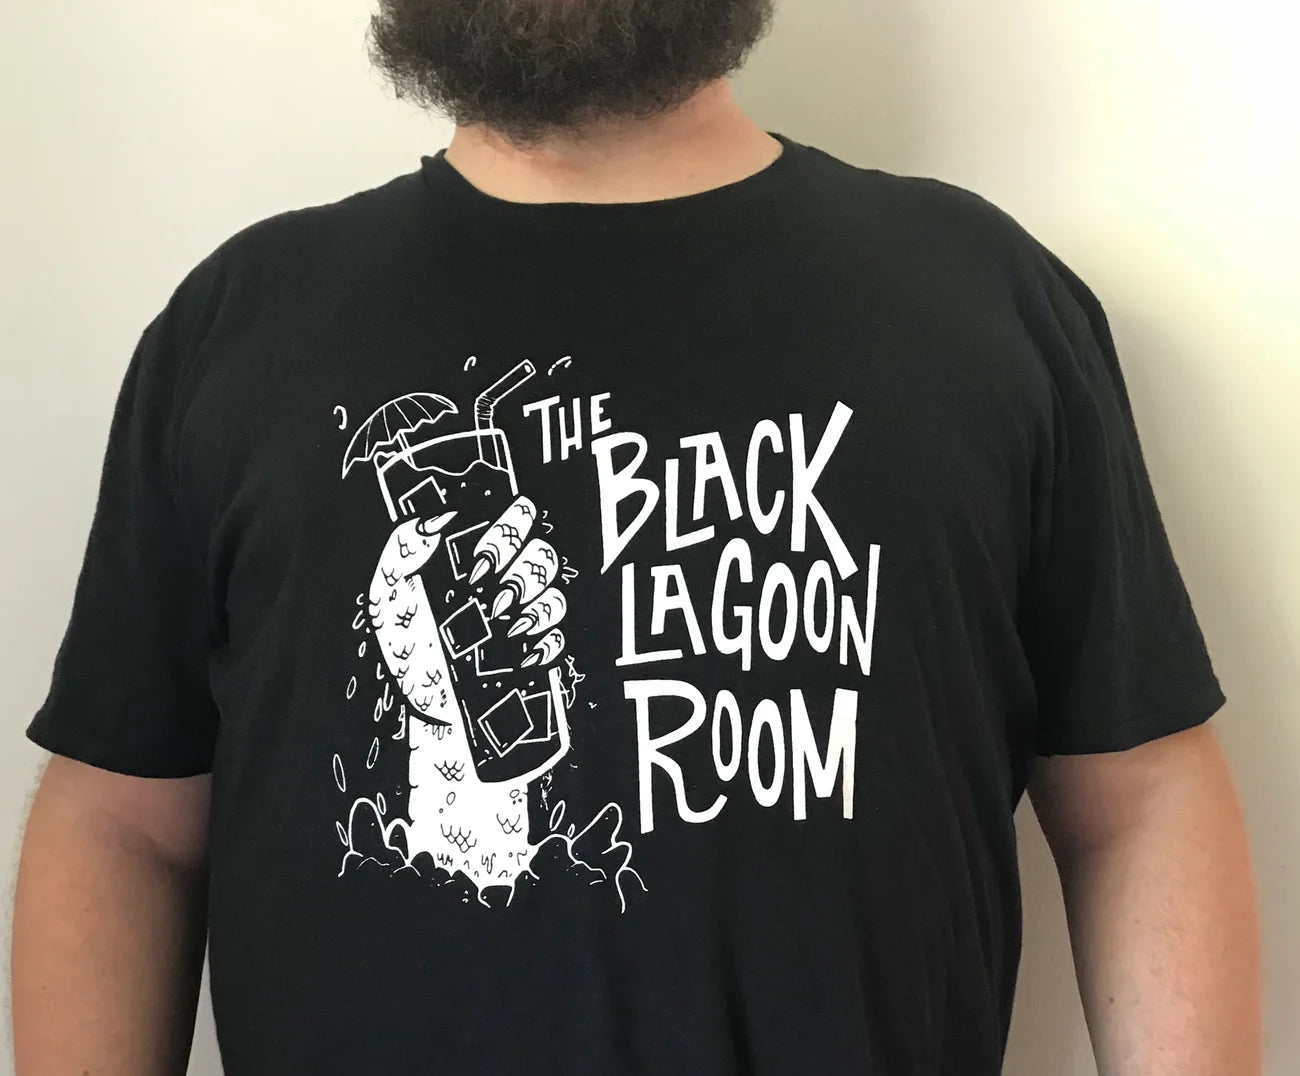 The Black Lagoon Room Logo shirt